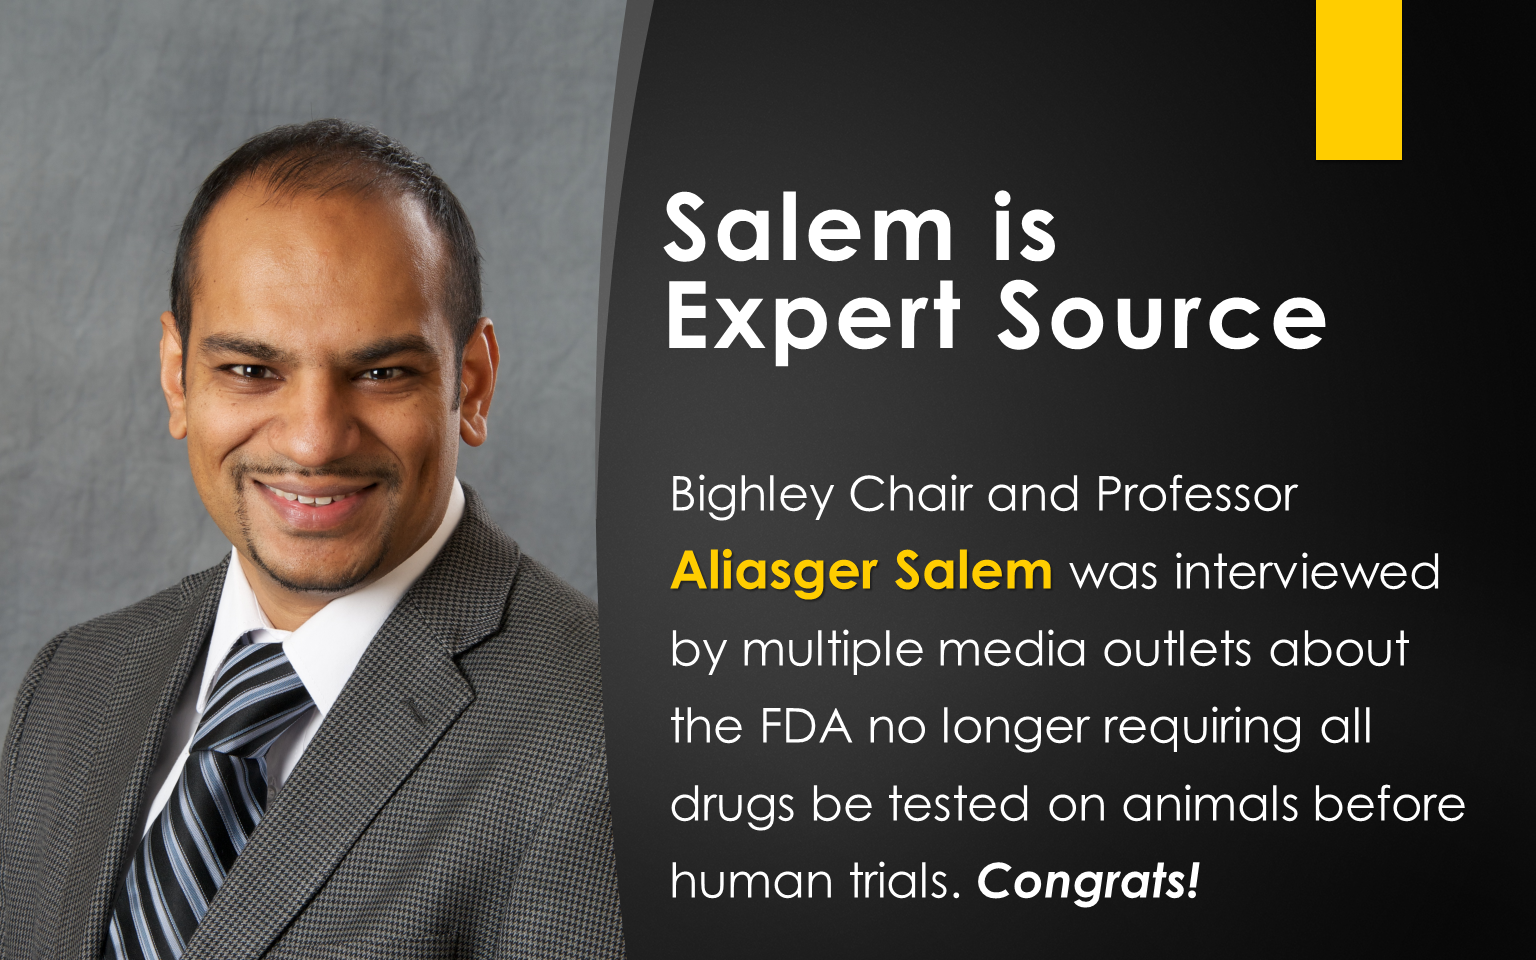 Salem is Expert Source